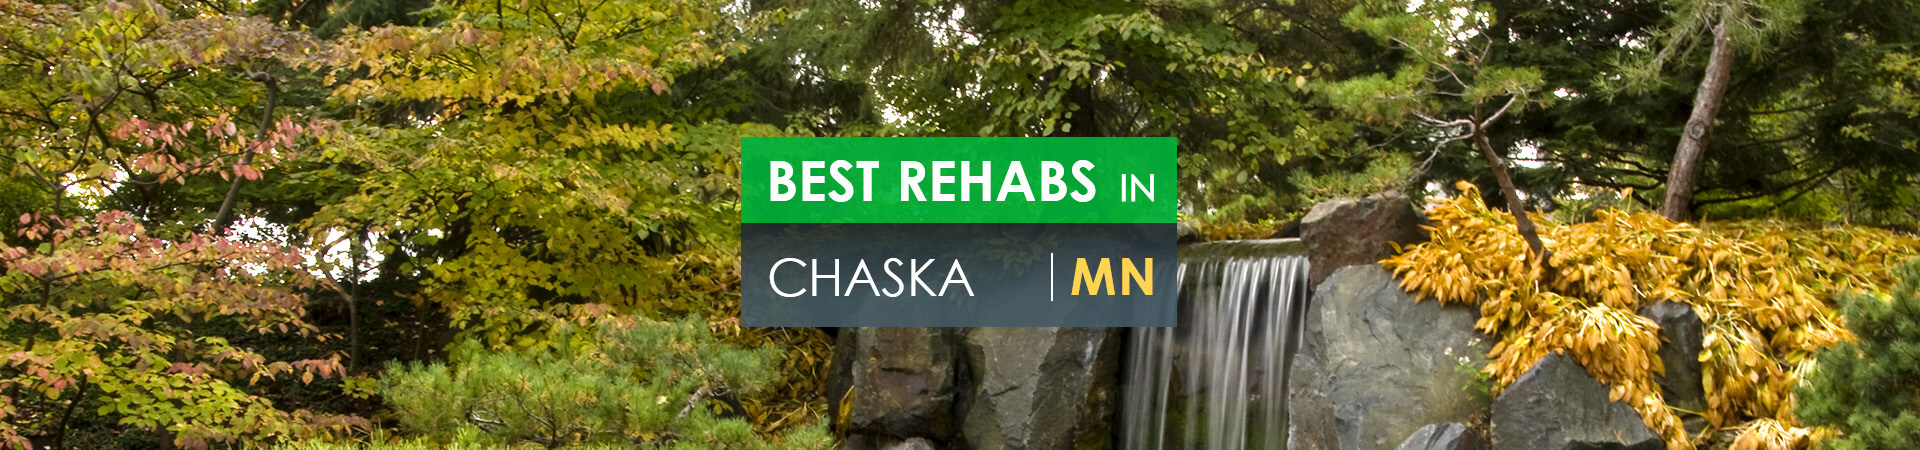 Best rehabs in Chaska, MN